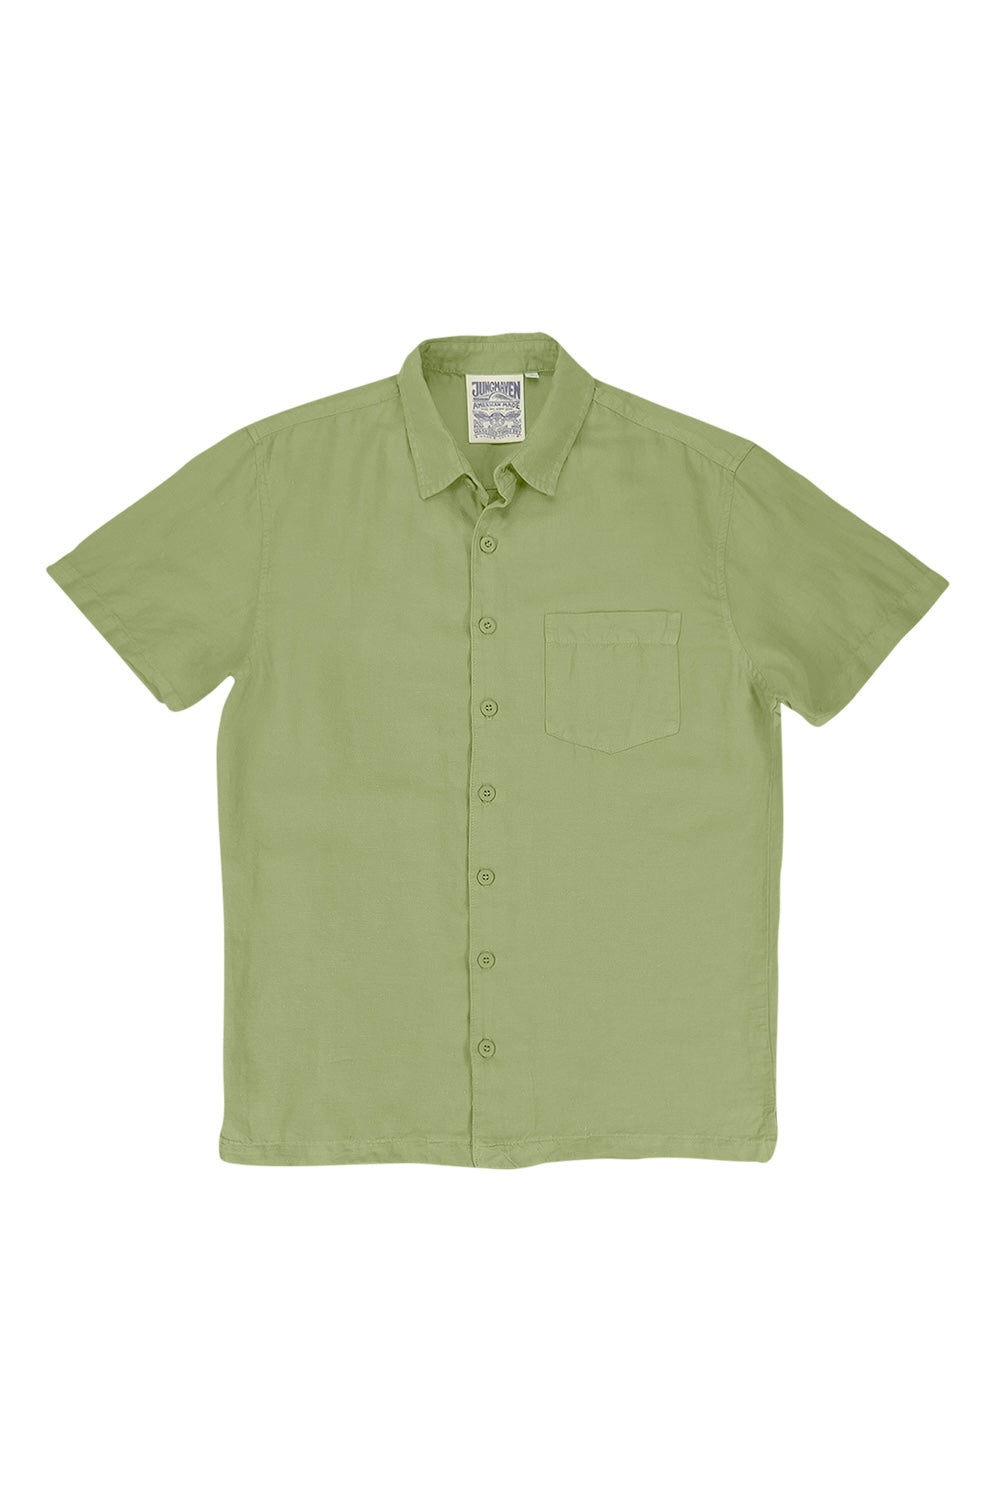 Tornado Shirt | Jungmaven Hemp Clothing & Accessories / Color:Dark Matcha